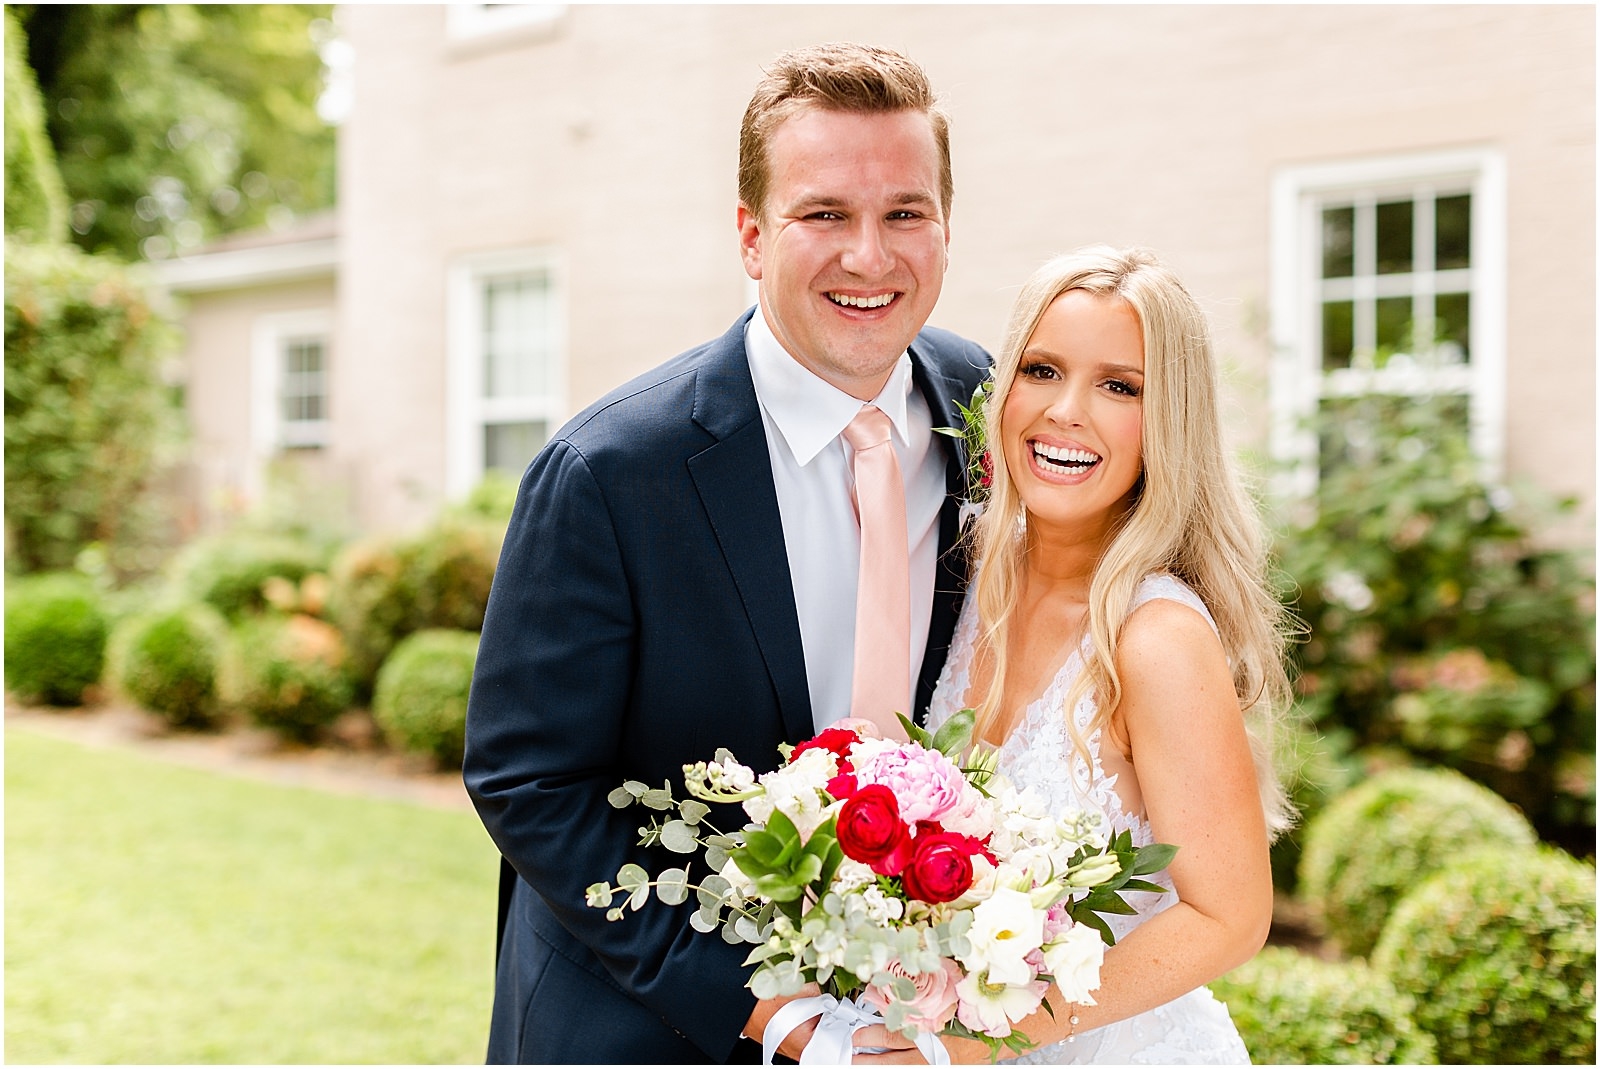 An Evansville Country Club Wedding | Madison and Christiaan | Bret and Brandie | Evansville Photographers | @bretandbrandie-0096.jpg